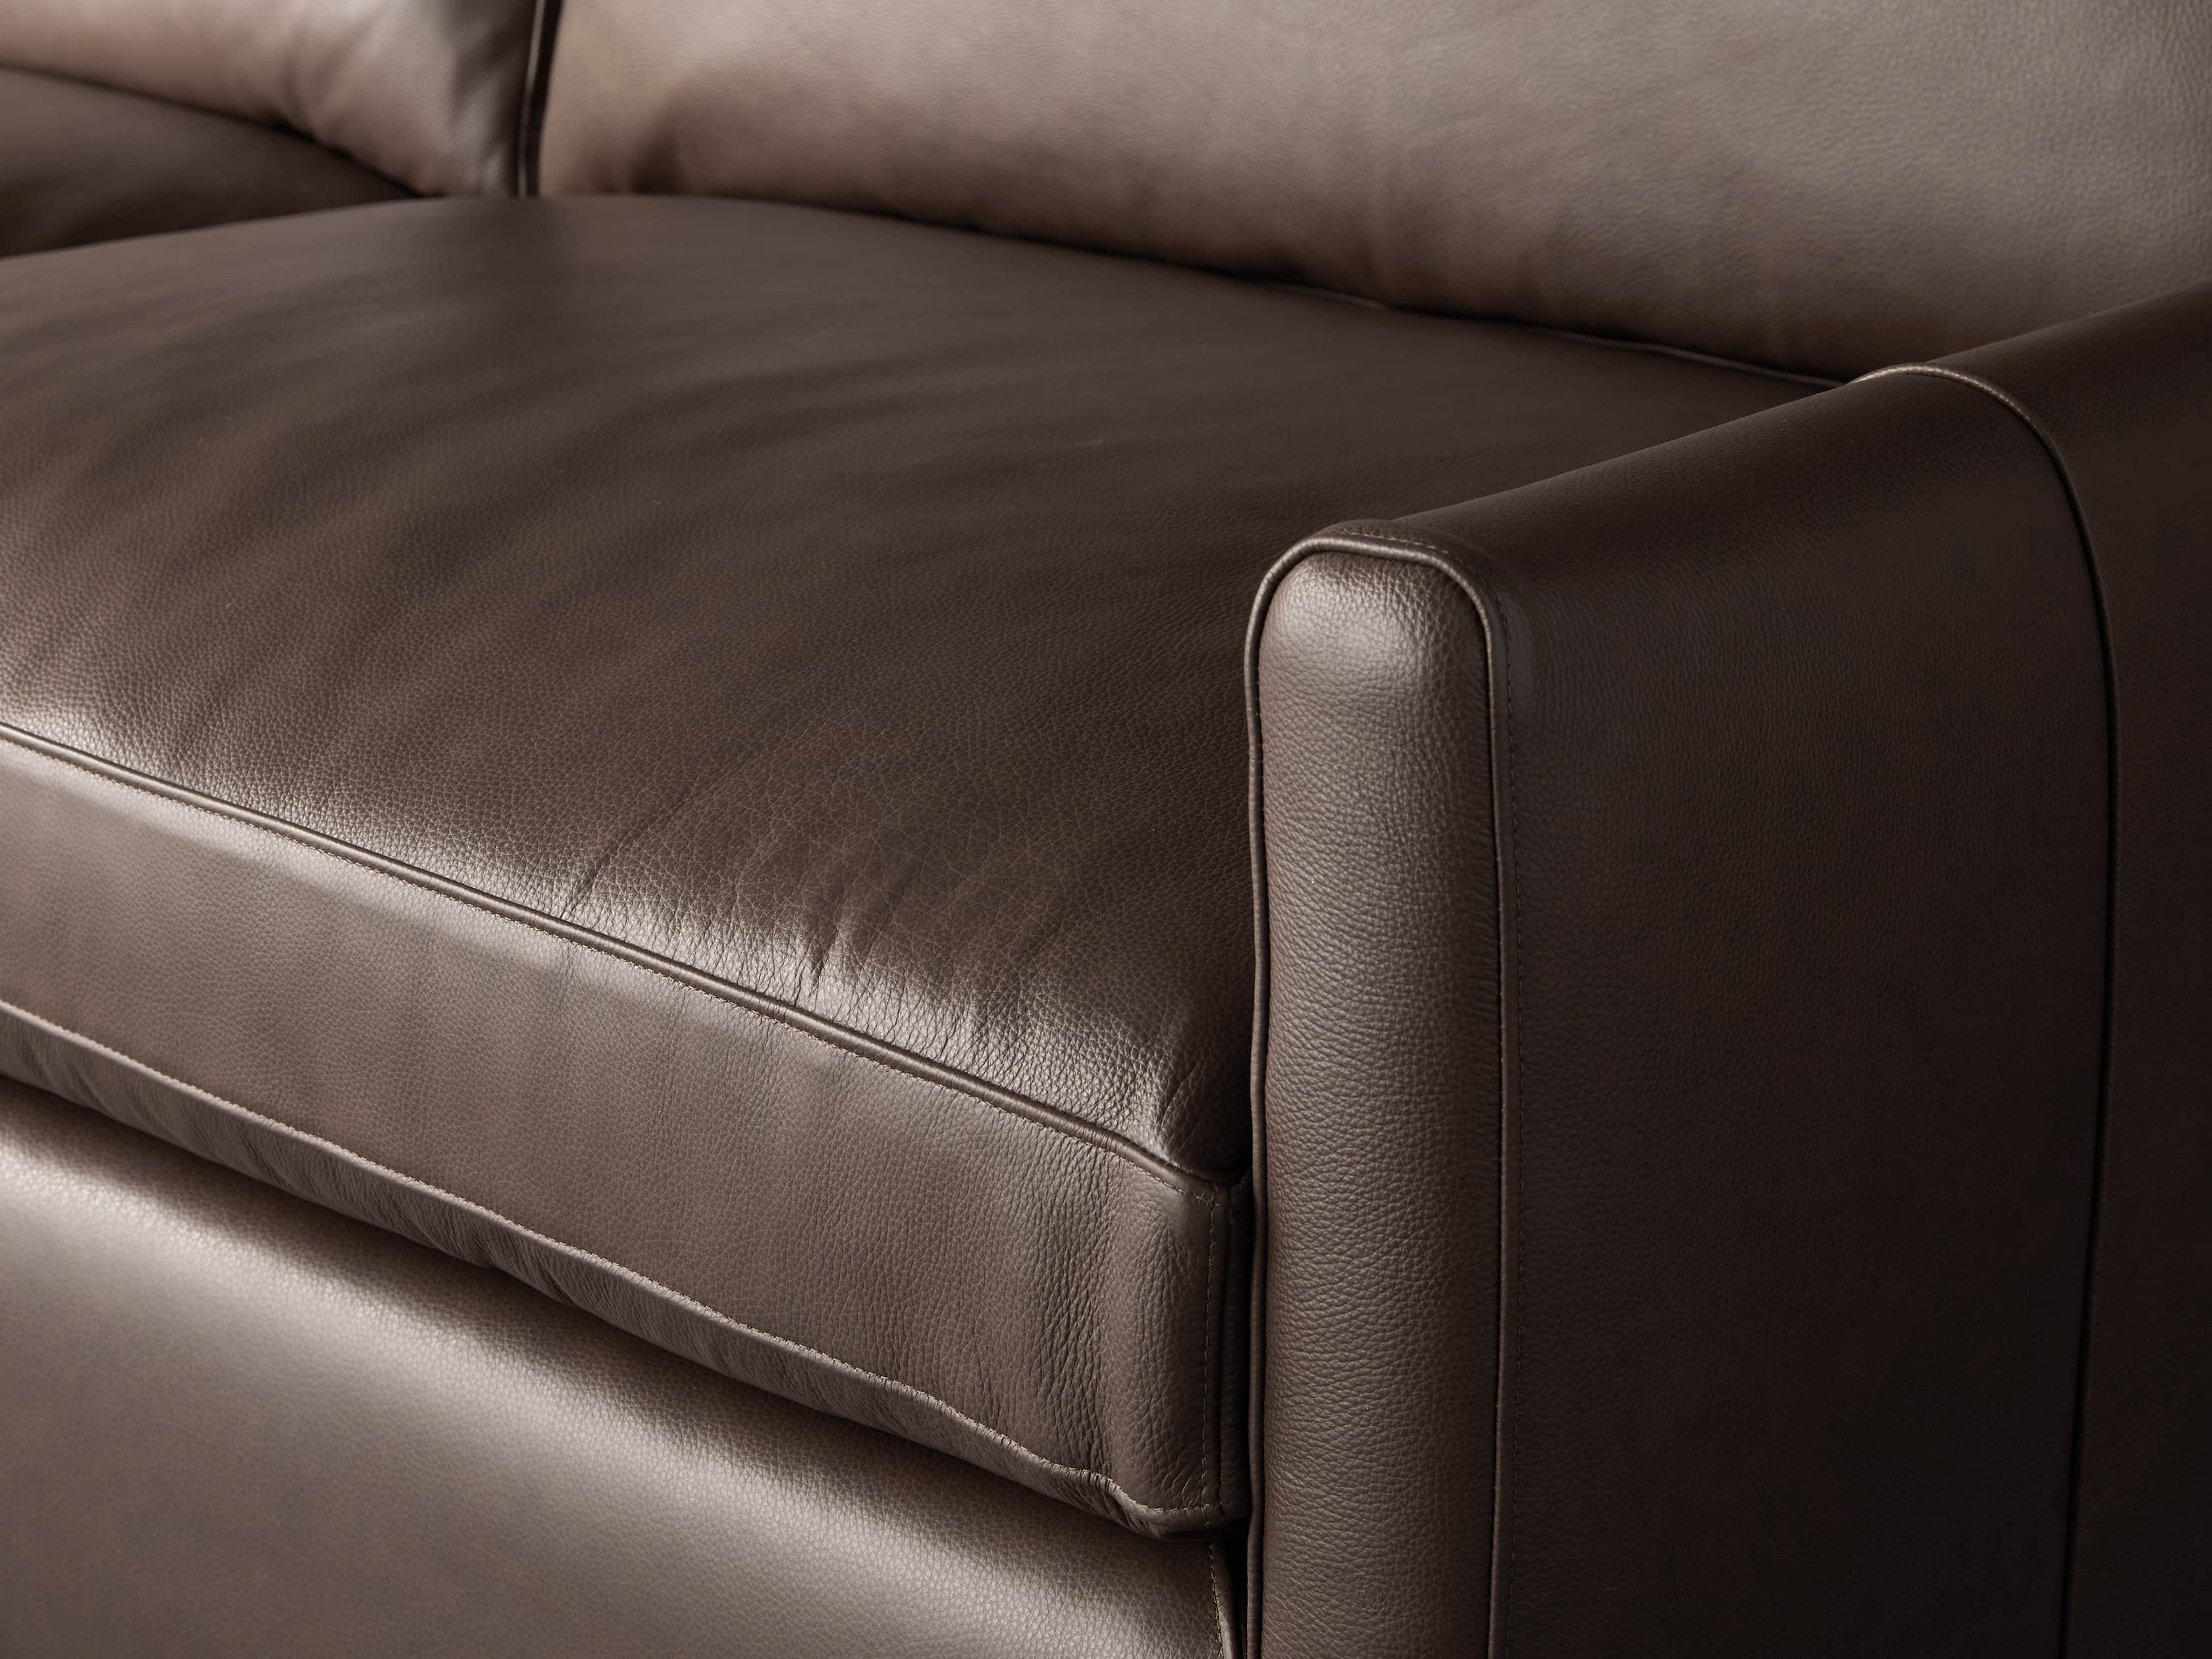 Kipton Leather Sofa Arhaus, Deep Leather Couches